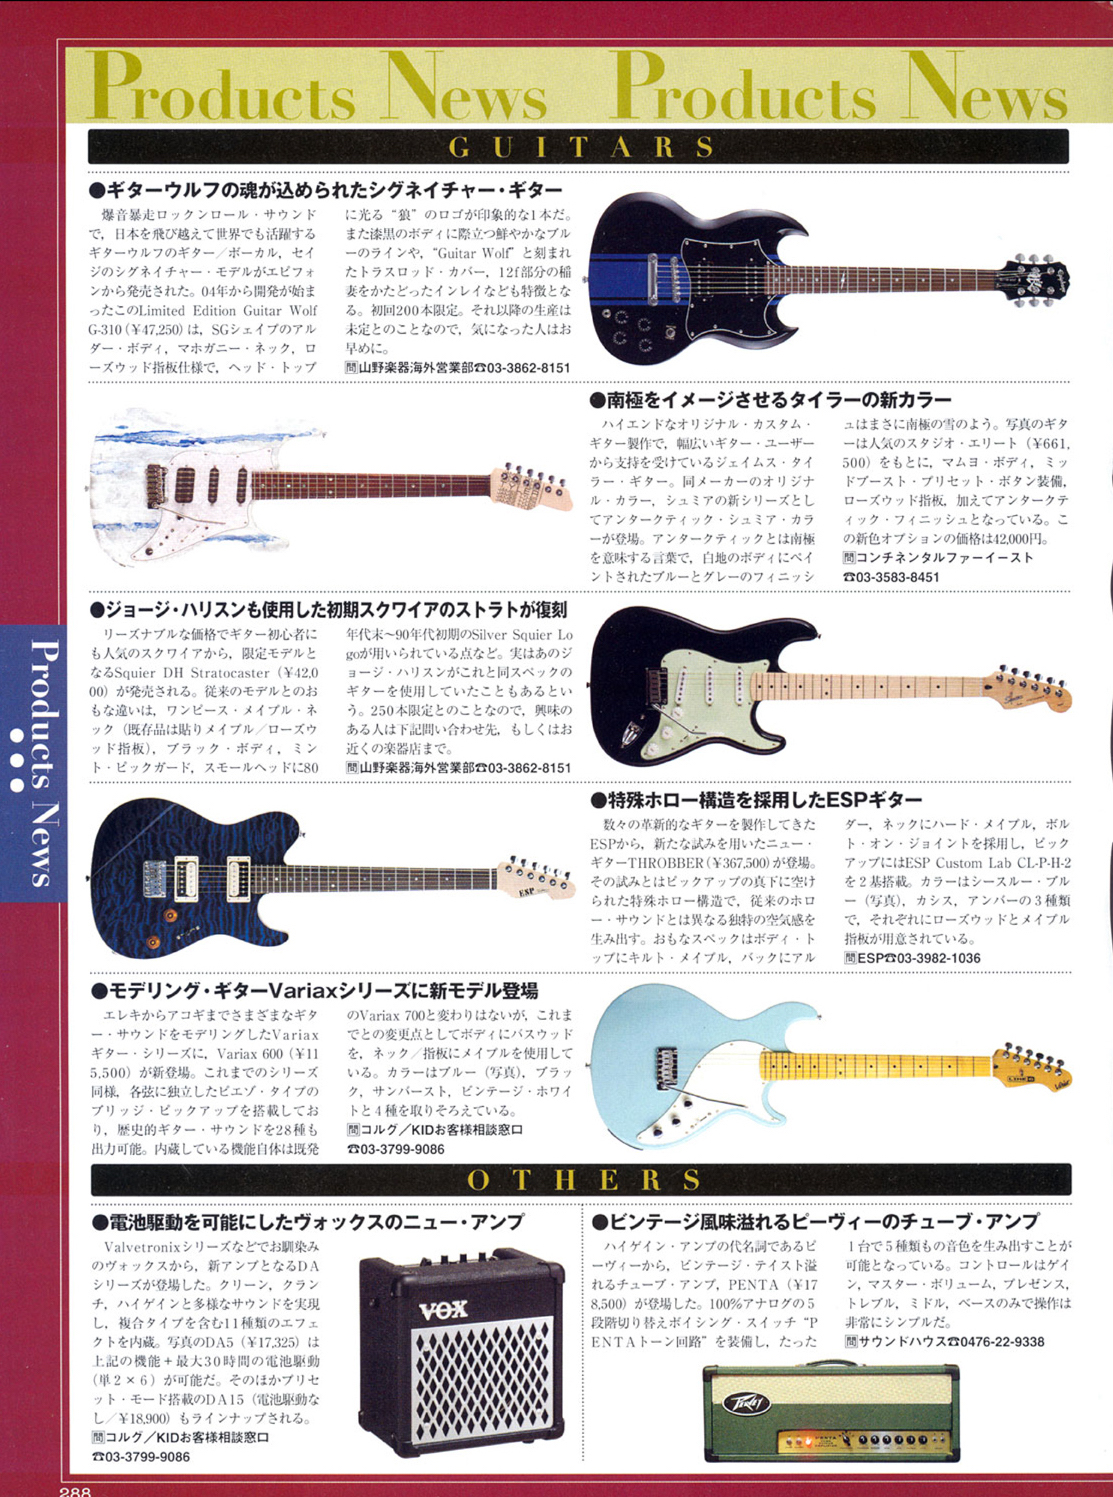 Copy of 2006 Guitar Magazine - Jan.